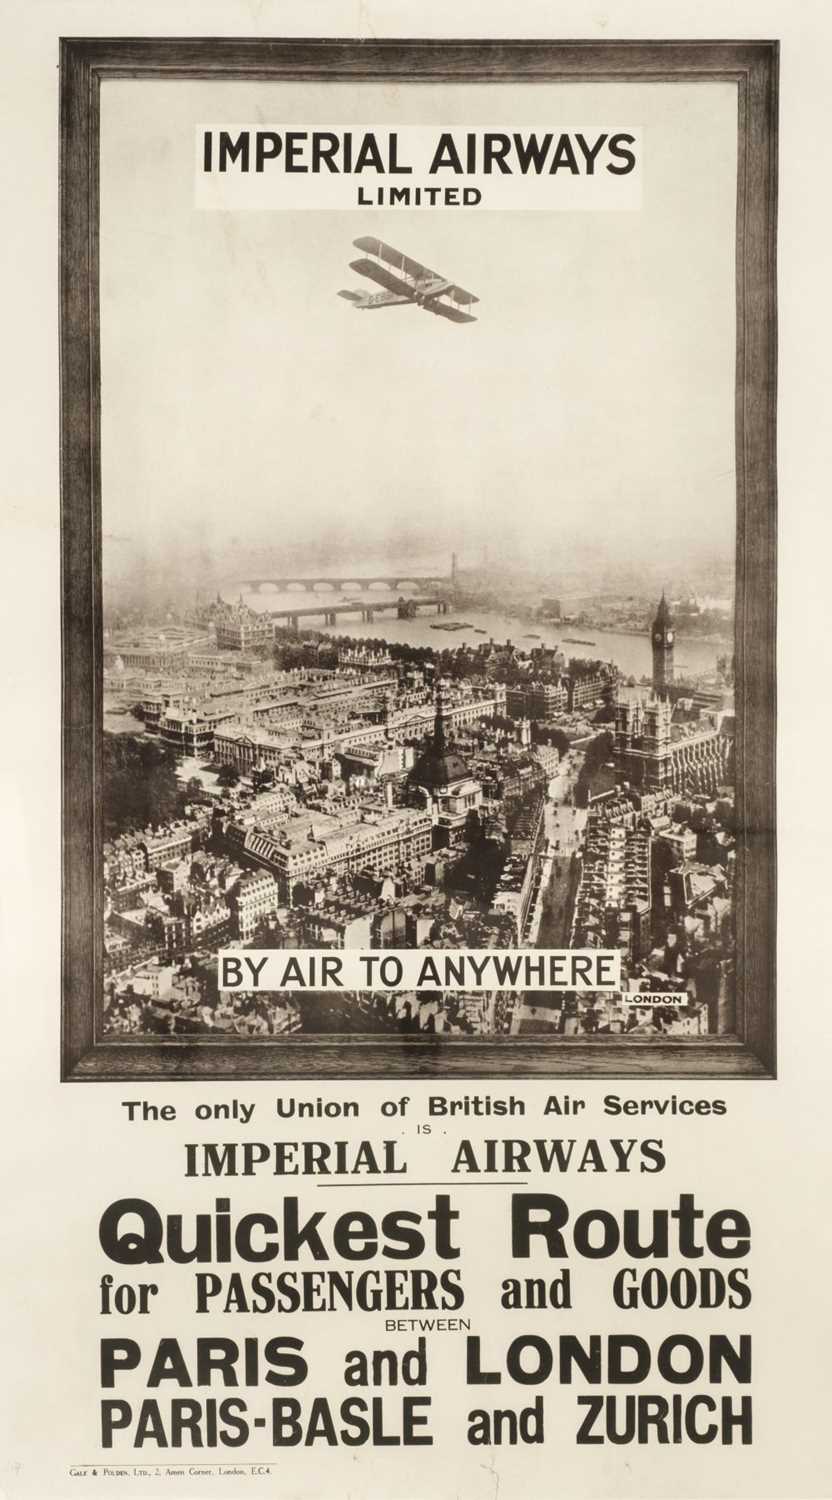 Lot 122 - Imperial Airways. An original Imperial Airways poster circa 1920s